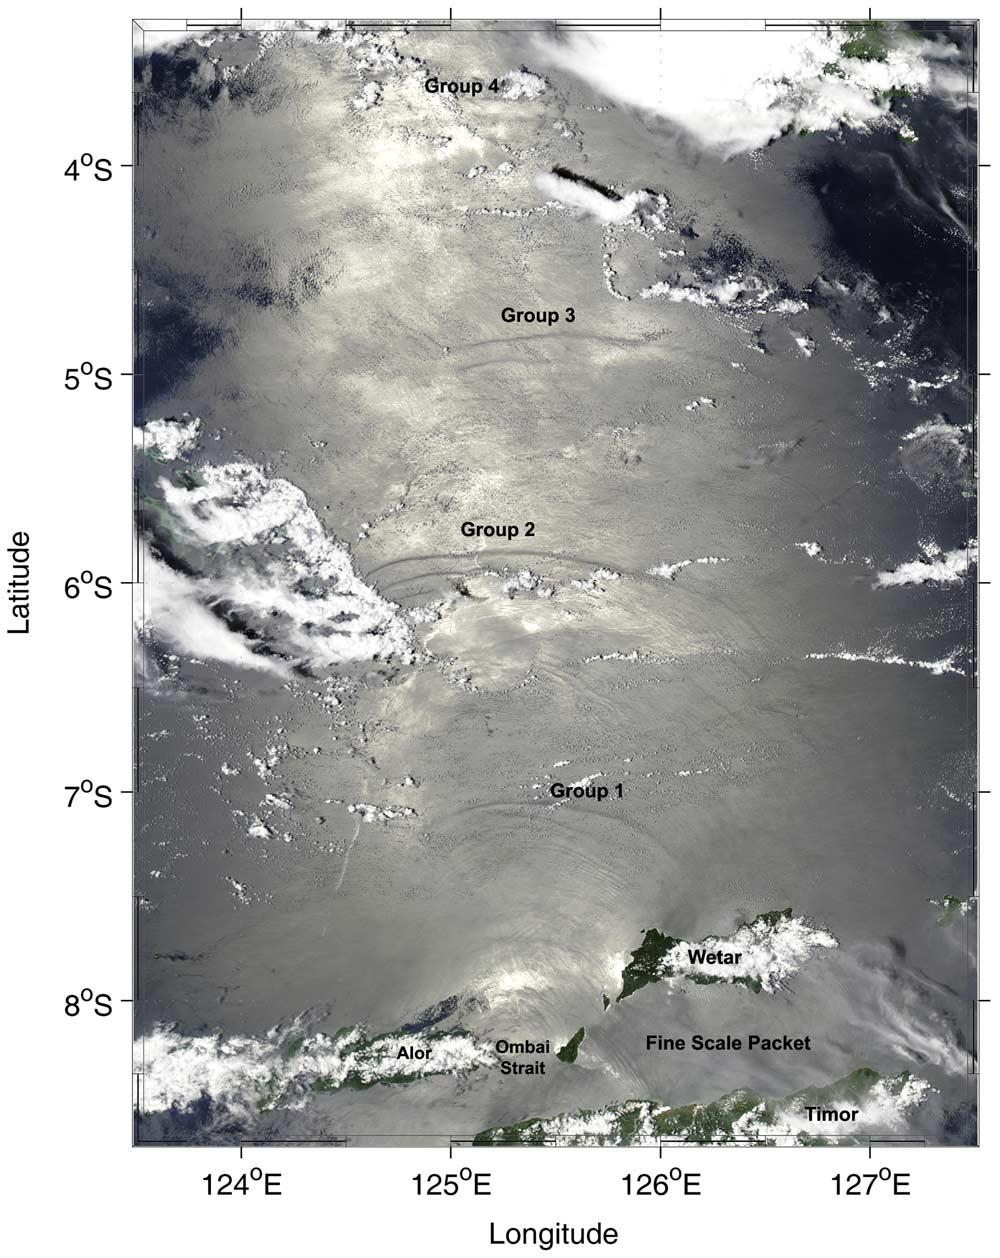 Figure 3. True-color MODIS image of the Banda Sea acquired on 24 February 2004 at 5:05 UTC.